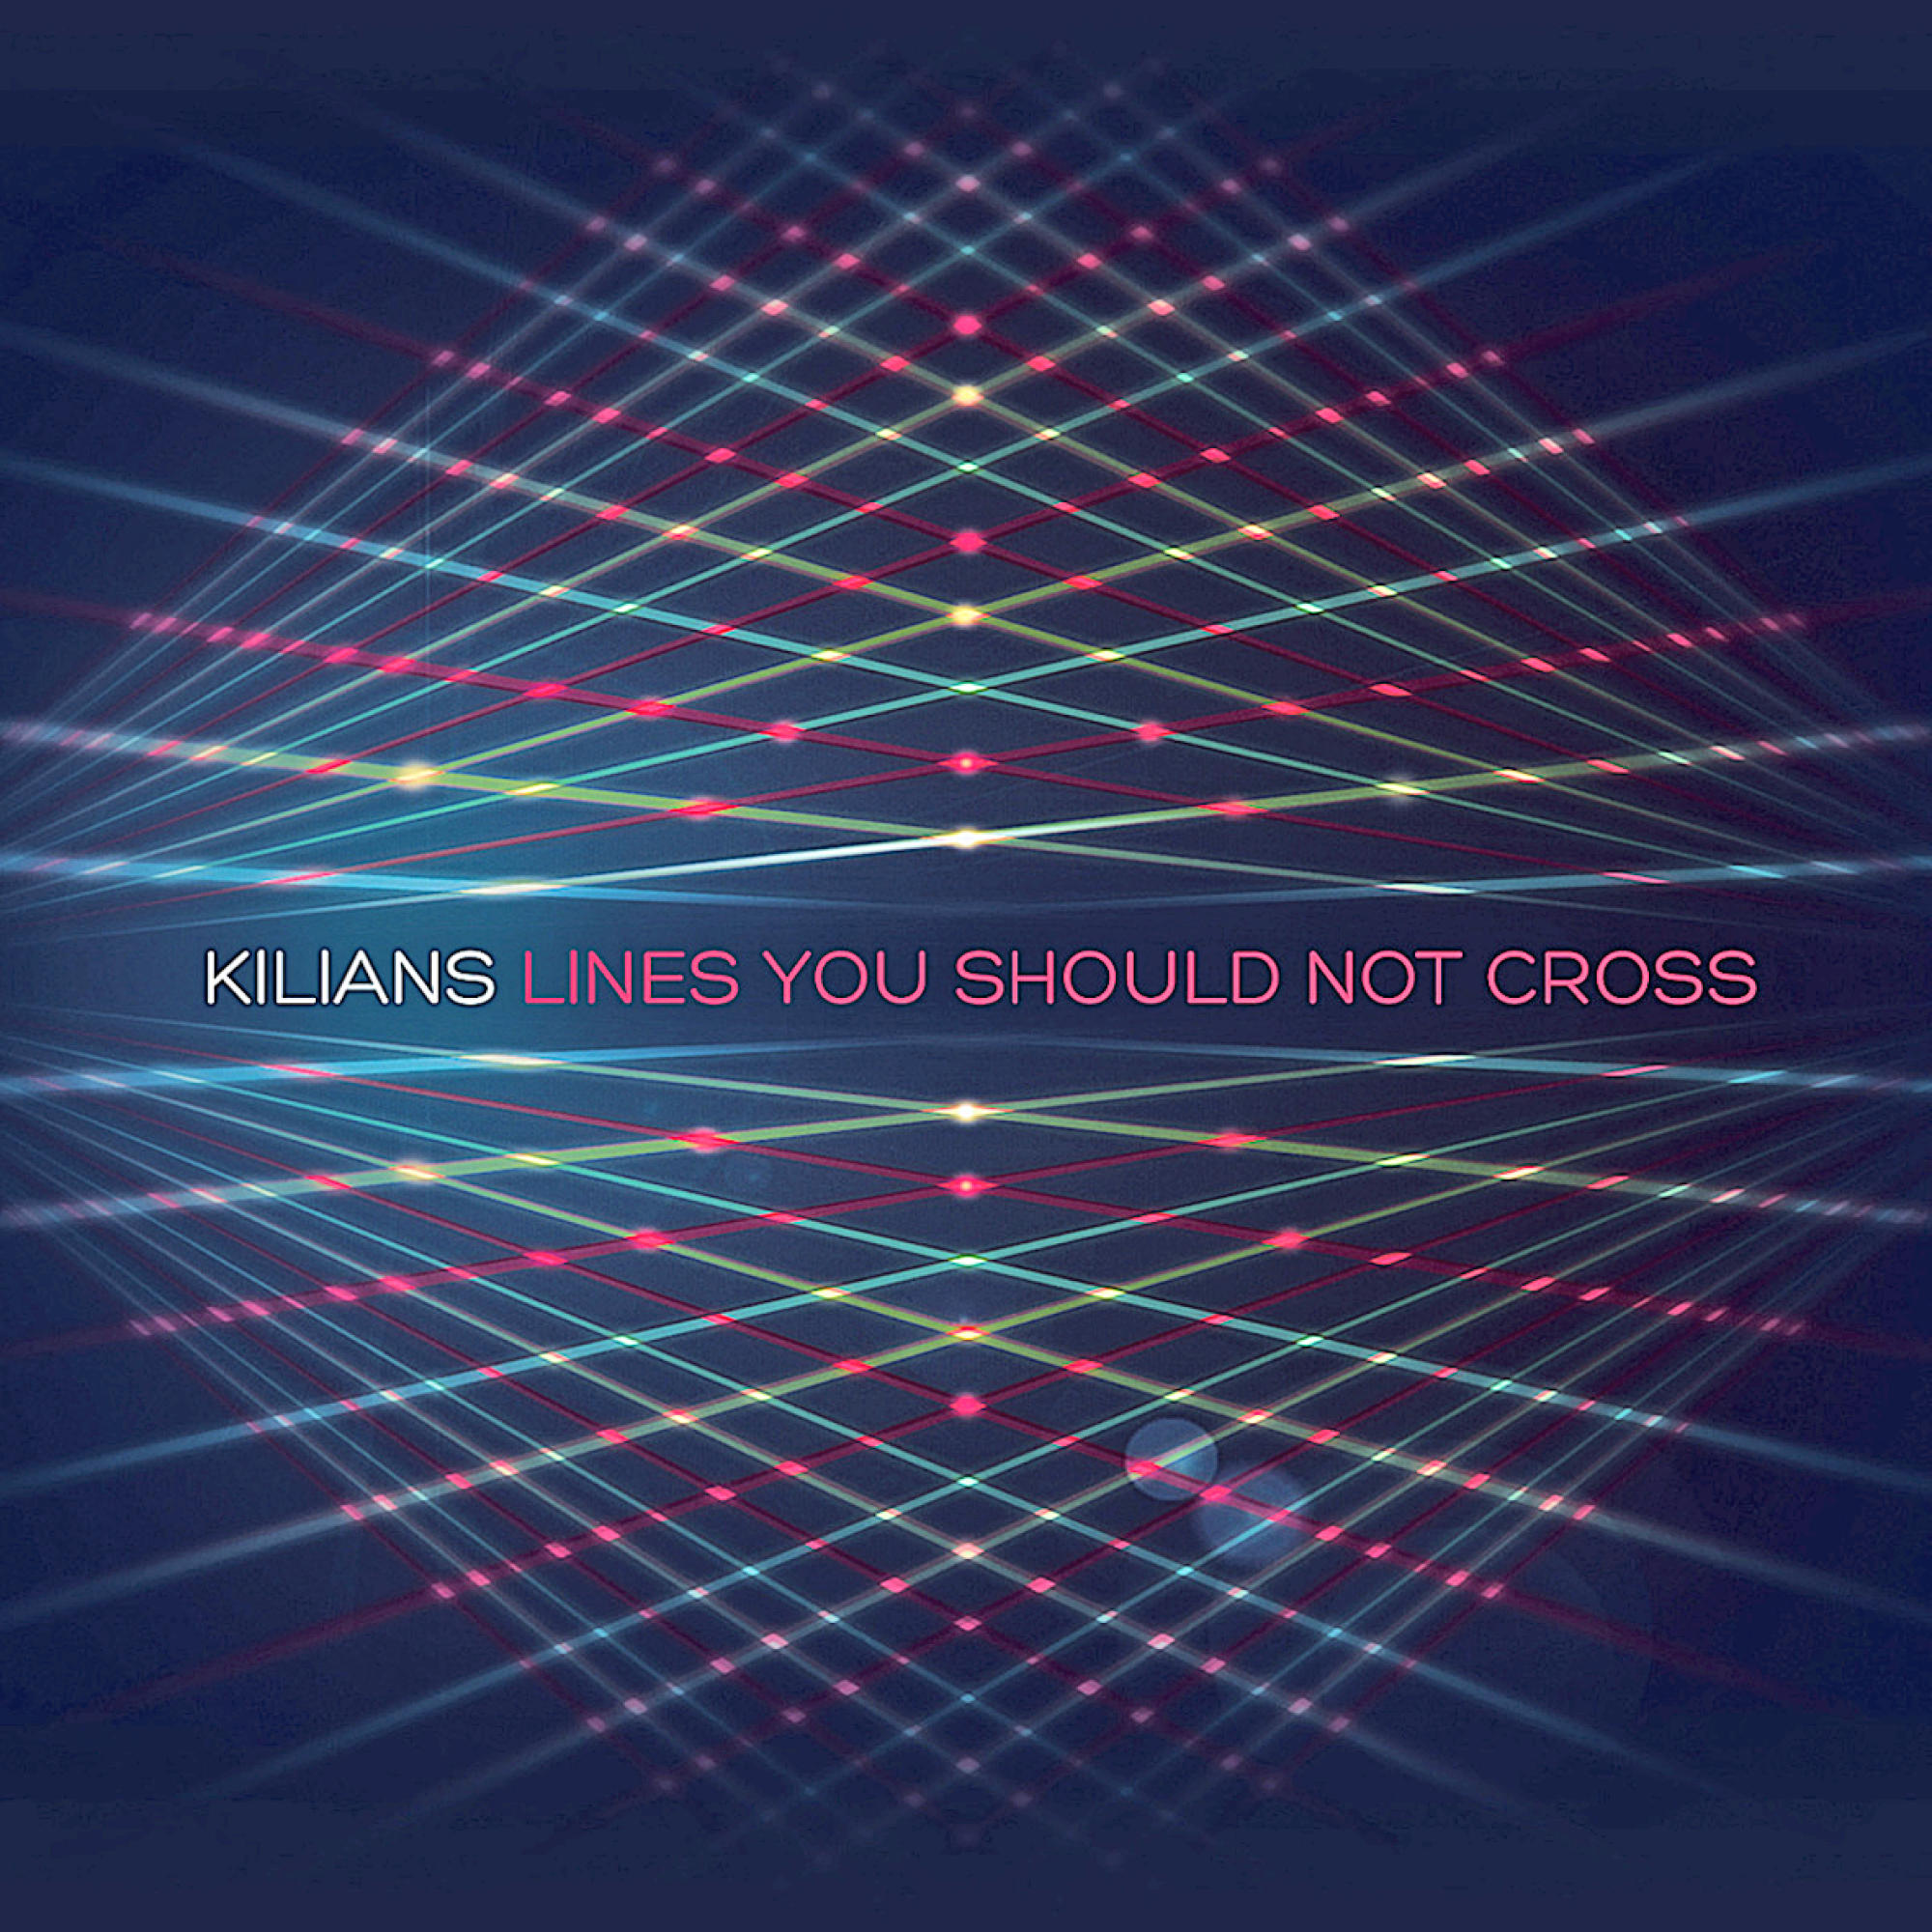 CROSS - Kilians YOU (CD) NOT SHOULD LINES -